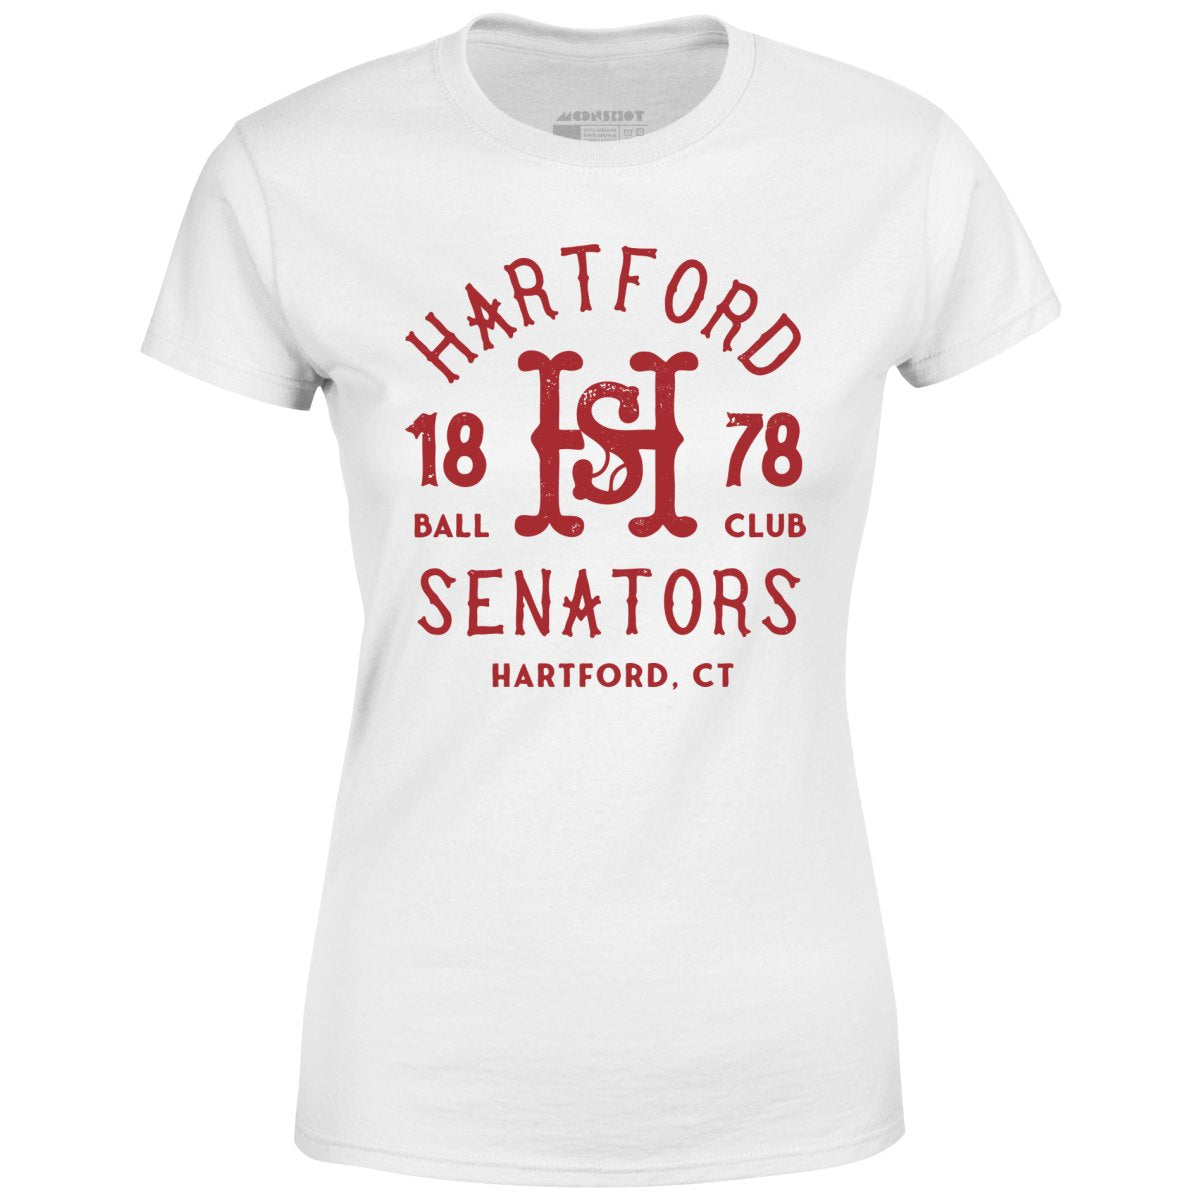 Hartford Senators - Connecticut - Vintage Defunct Baseball Teams - Women's T-Shirt